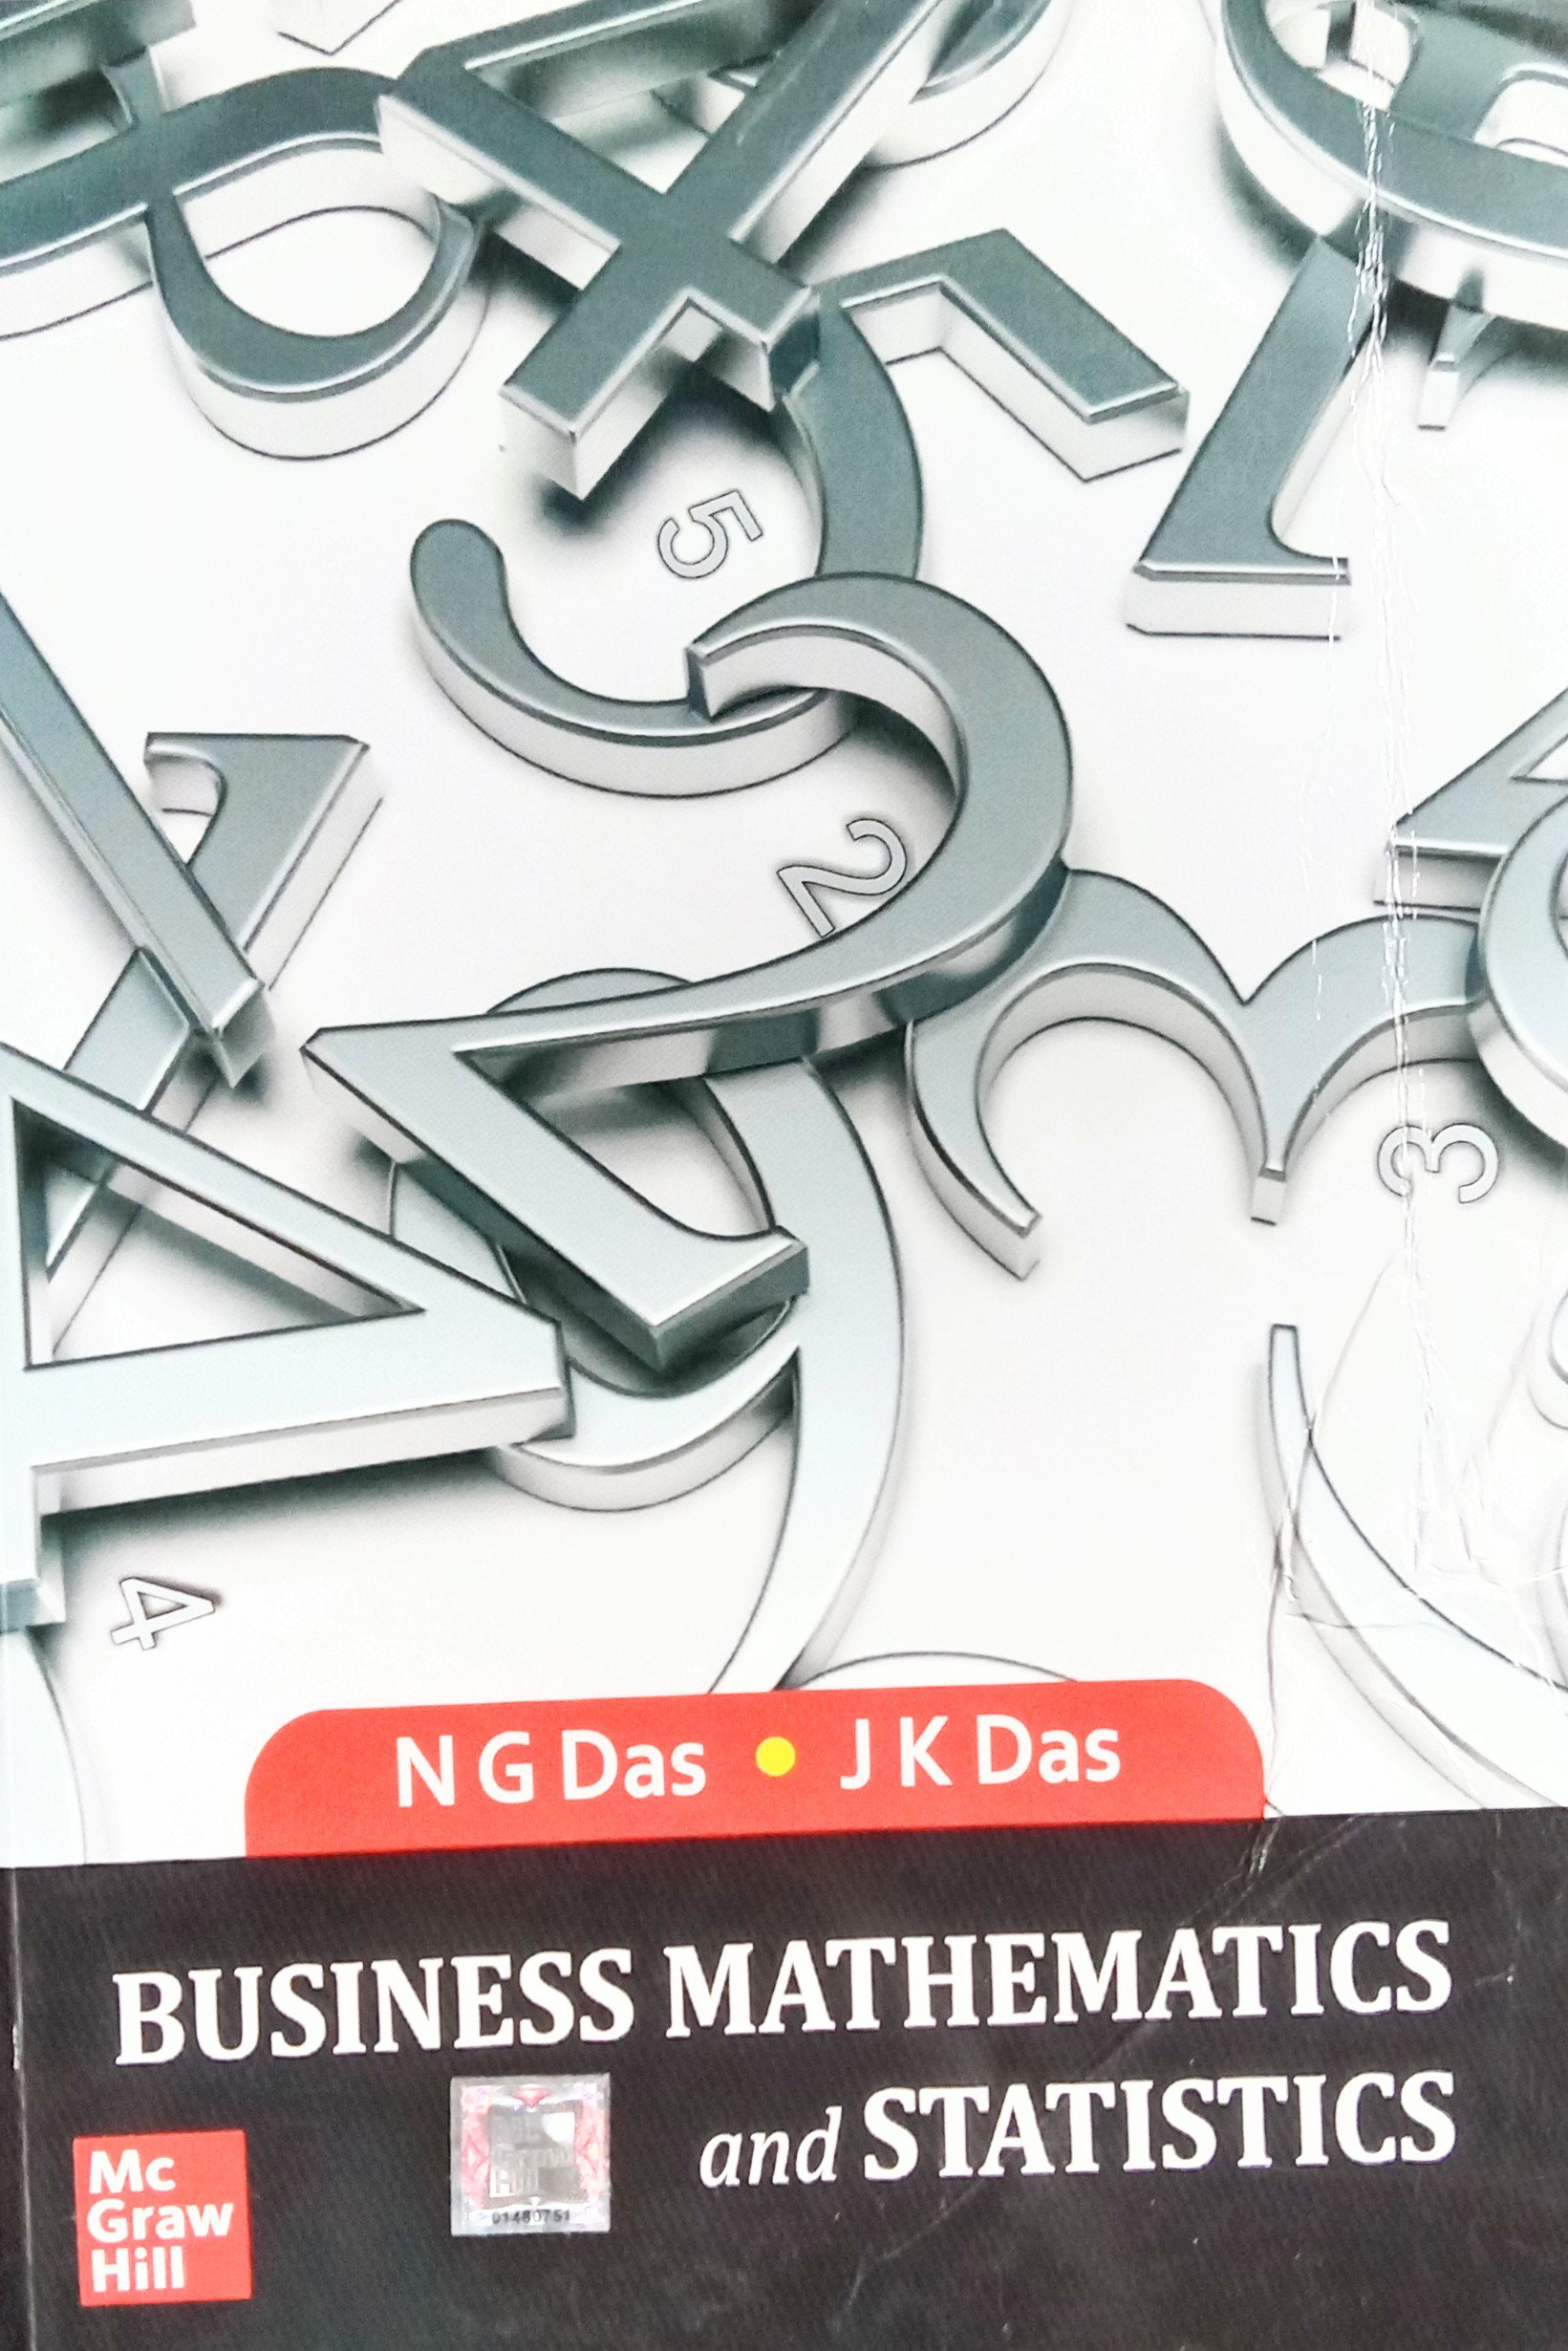 Business Mathematics and Statistics By N G Das And J K Das